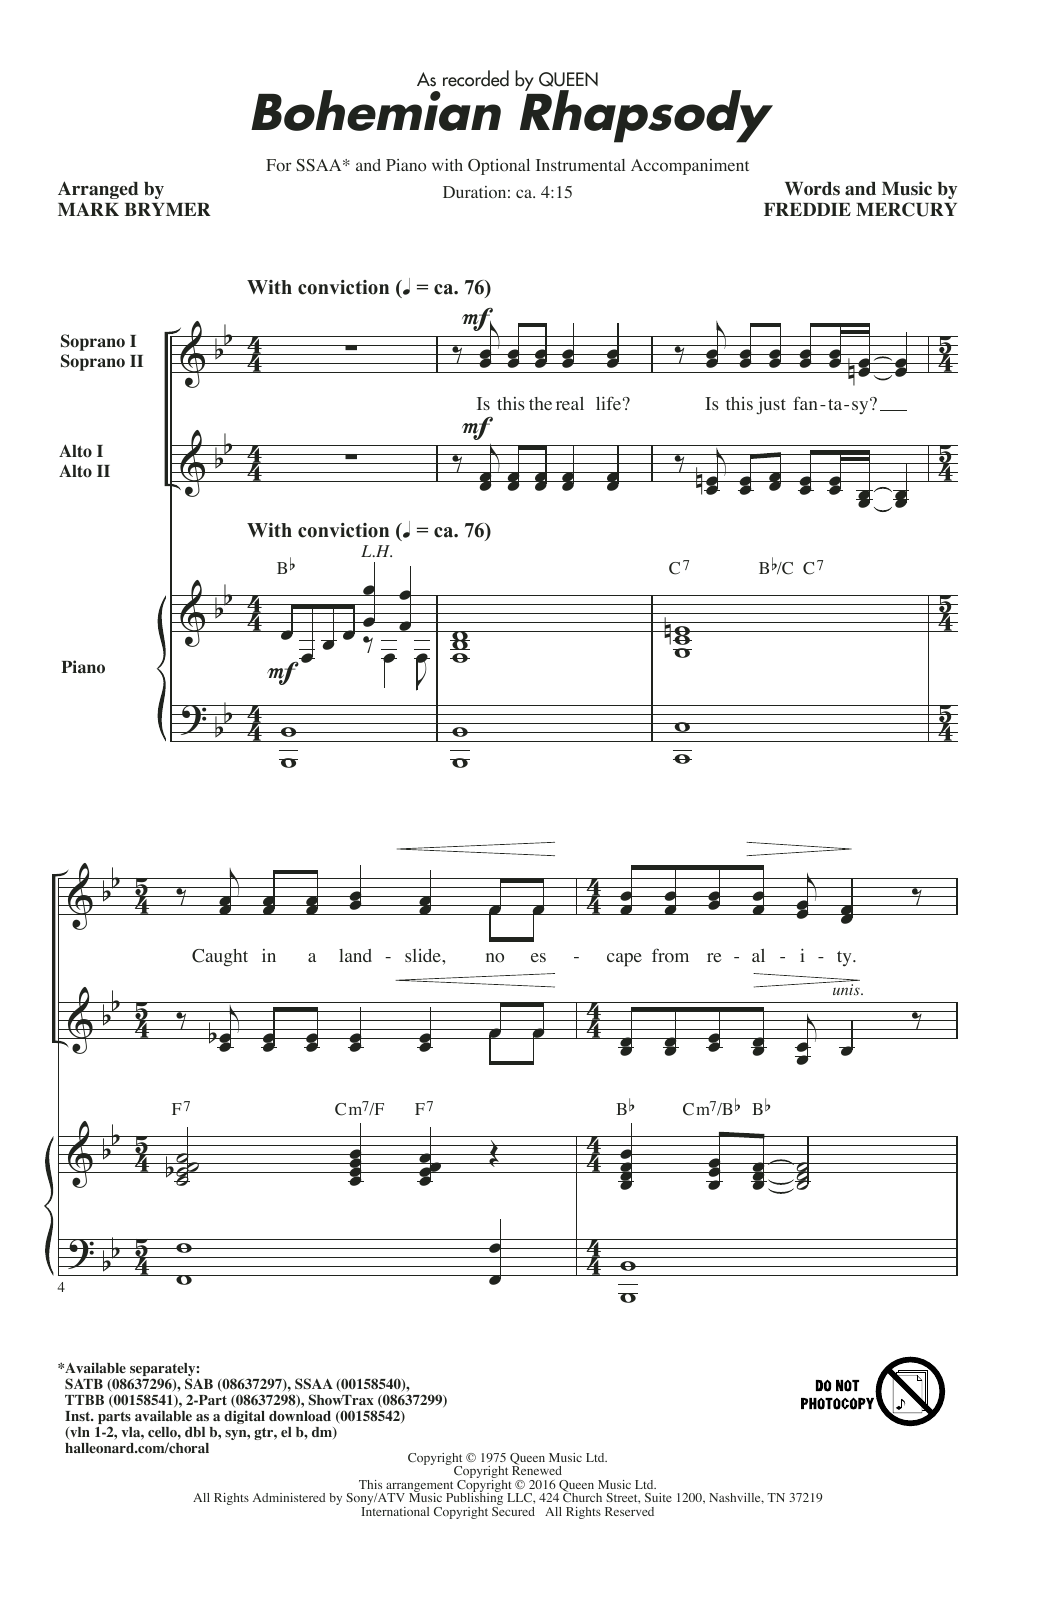 Queen Bohemian Rhapsody (arr. Mark Brymer) Sheet Music Notes & Chords for 2-Part Choir - Download or Print PDF